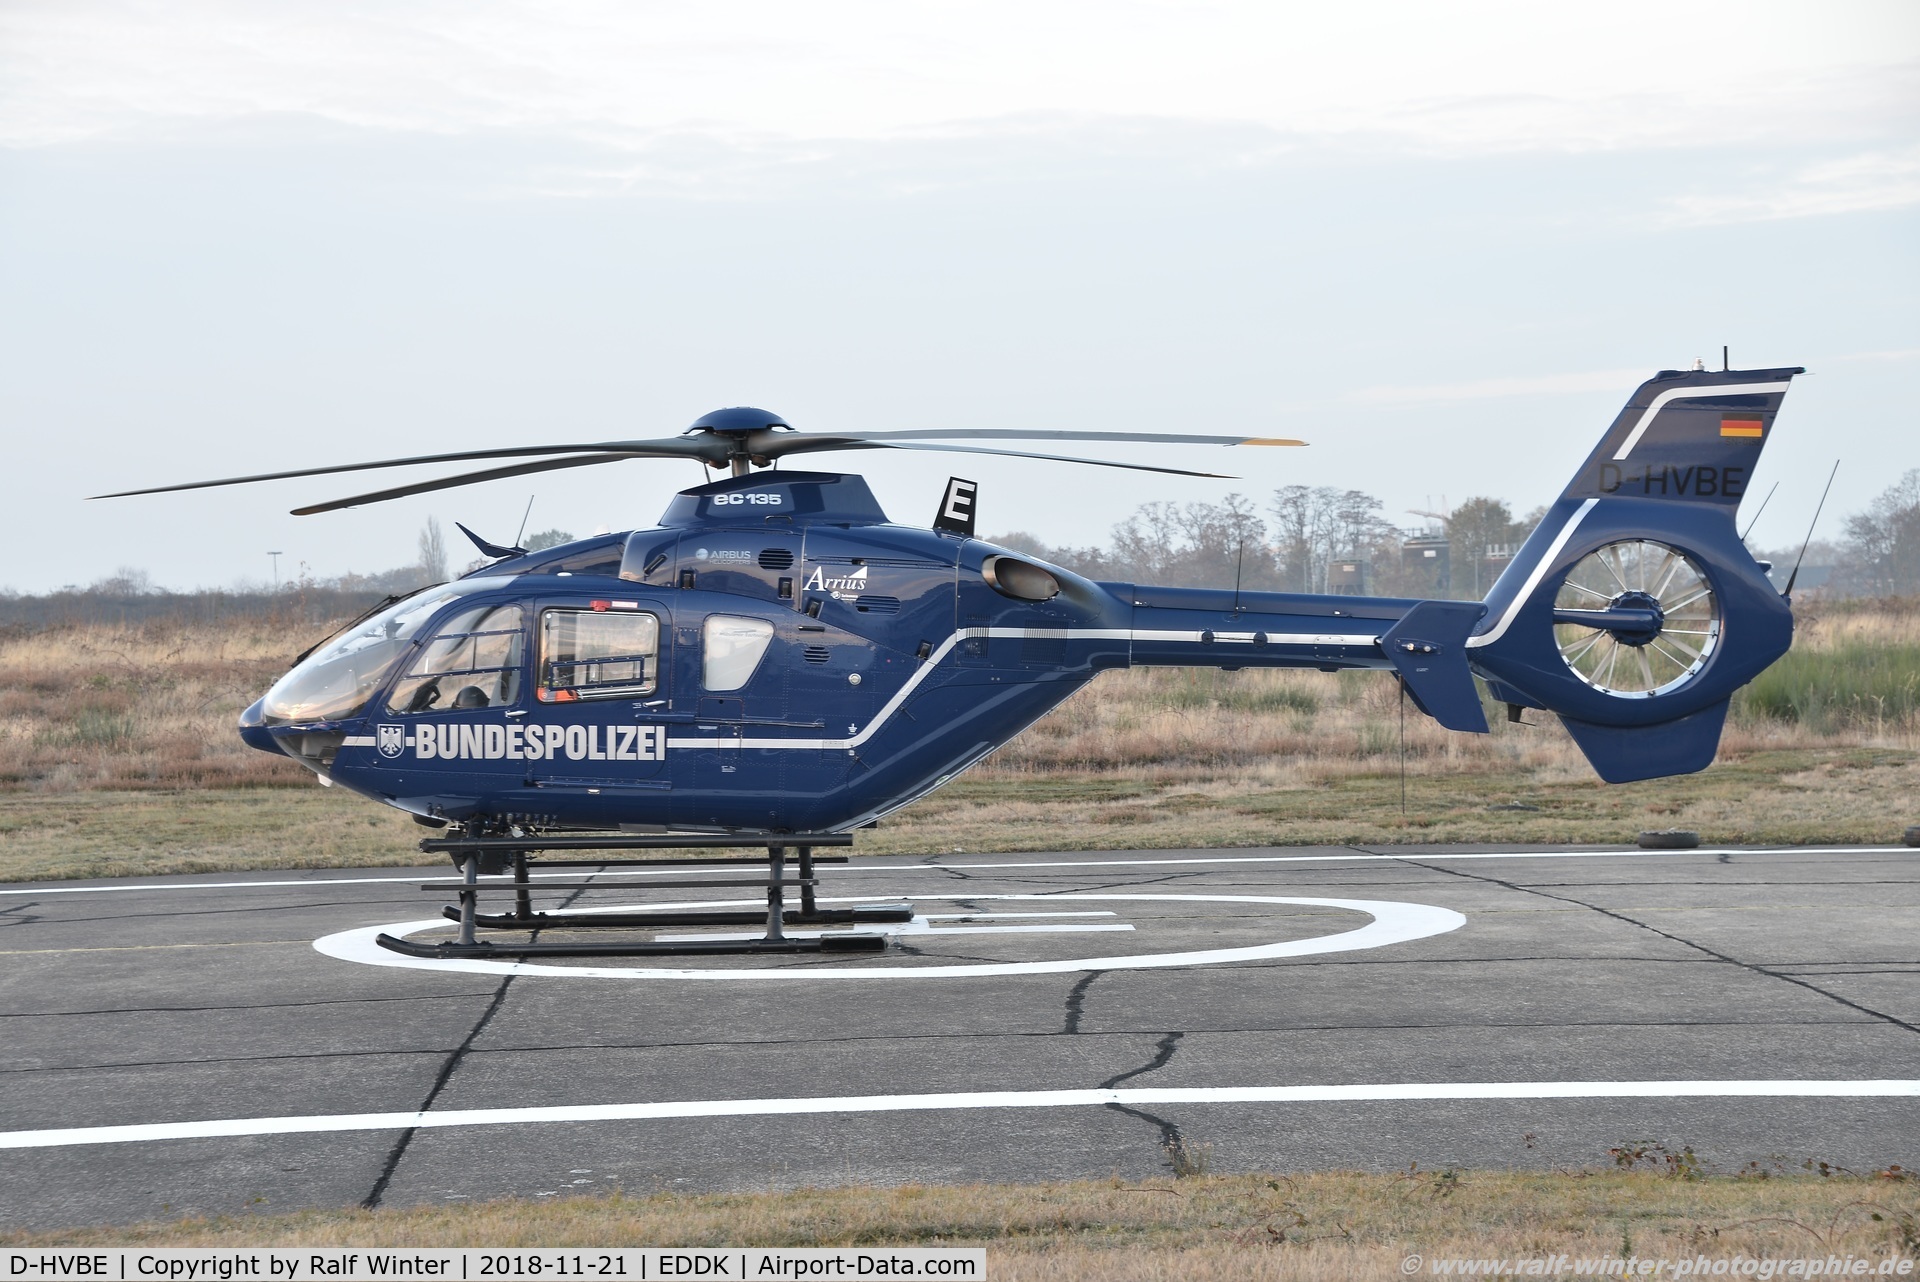 D-HVBE, 2000 Eurocopter EC-135T-2 C/N 0152, Eurocopter EC-135 T2 - BPO Bundespolizei - 0152 - D-HVBE - 21.11.2018 - CGN